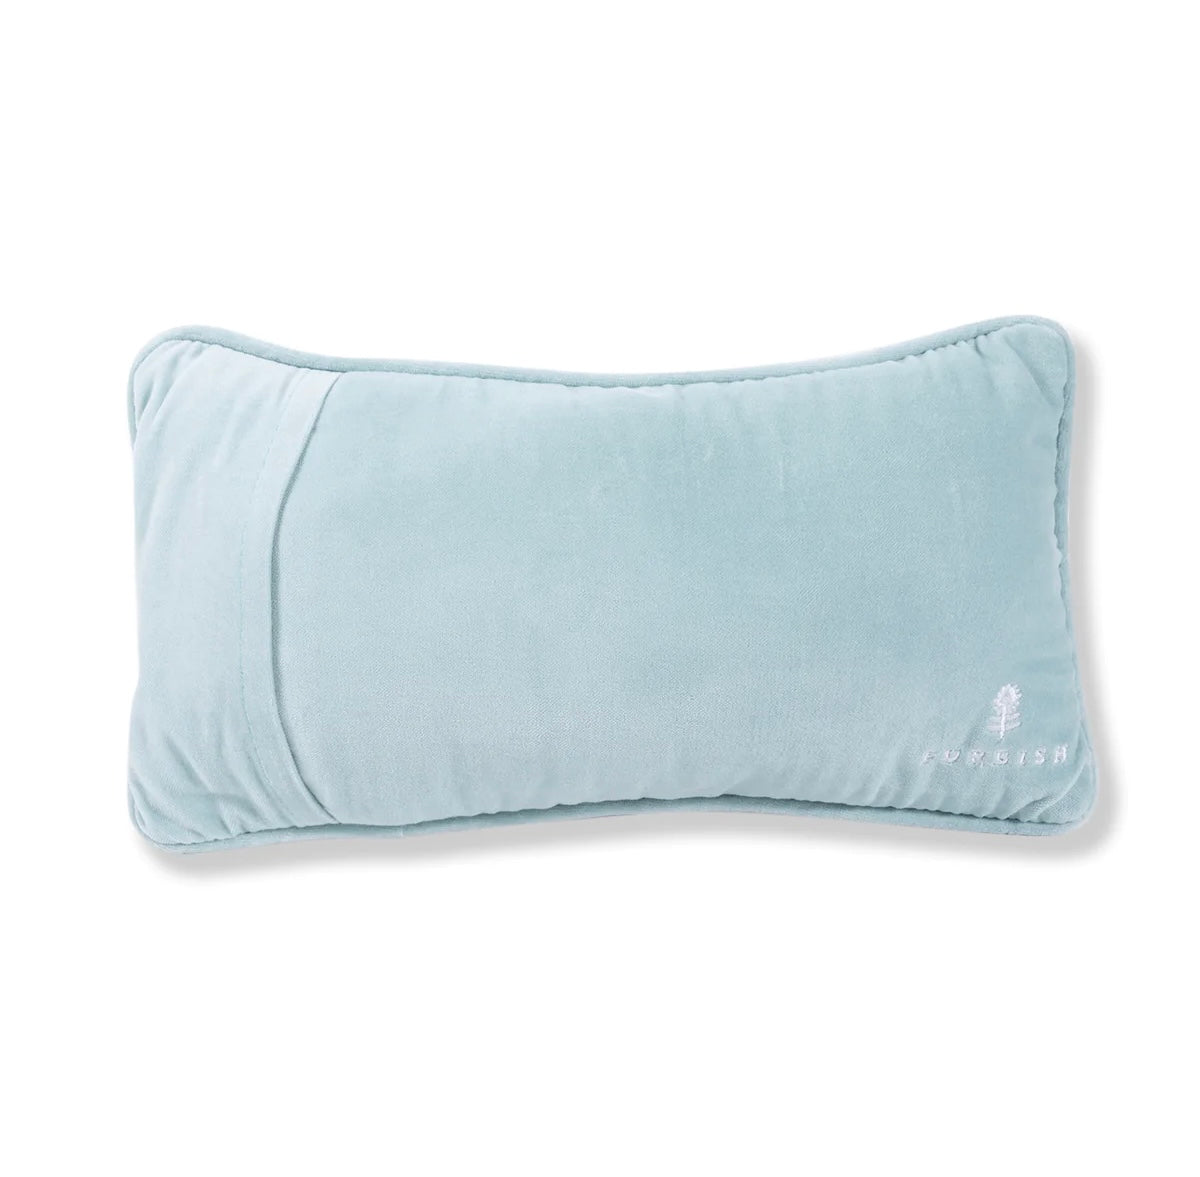 Furbish: Gossip Needlepoint Pillow